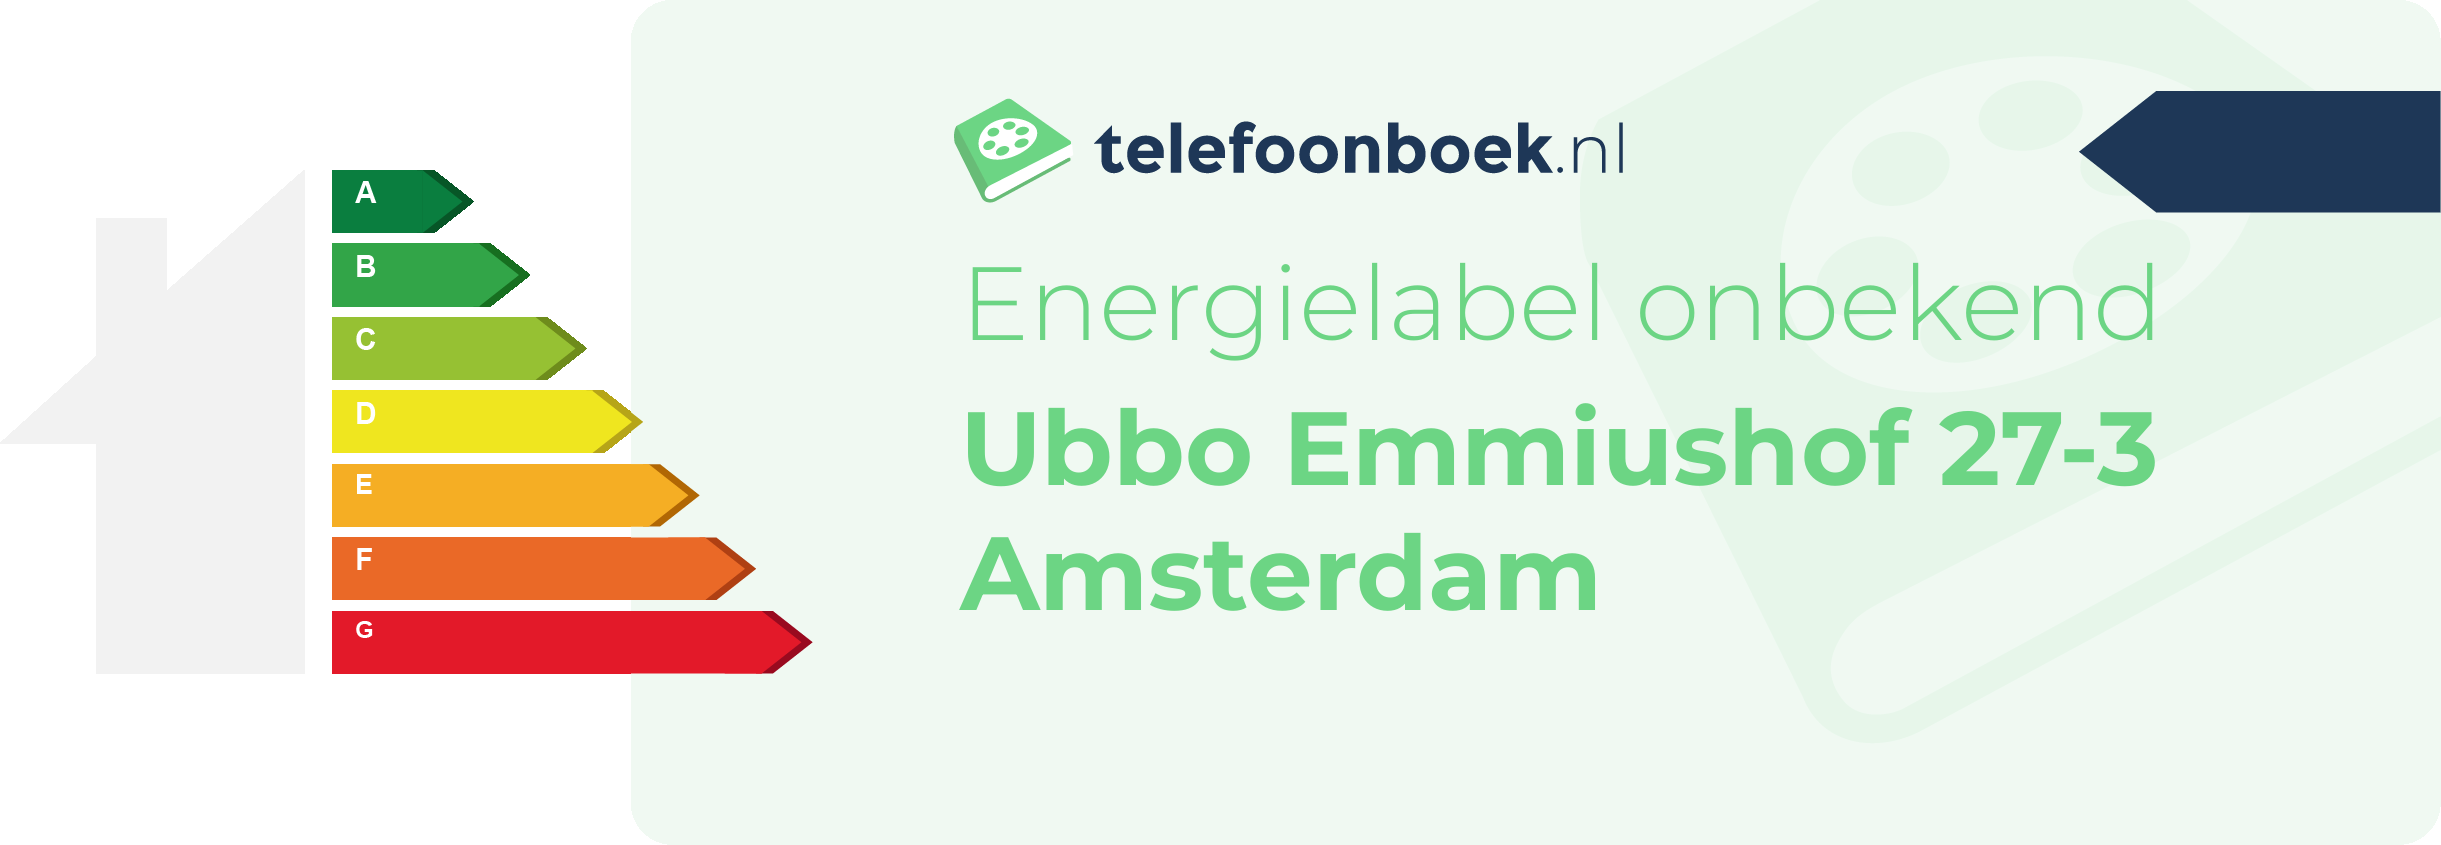 Energielabel Ubbo Emmiushof 27-3 Amsterdam